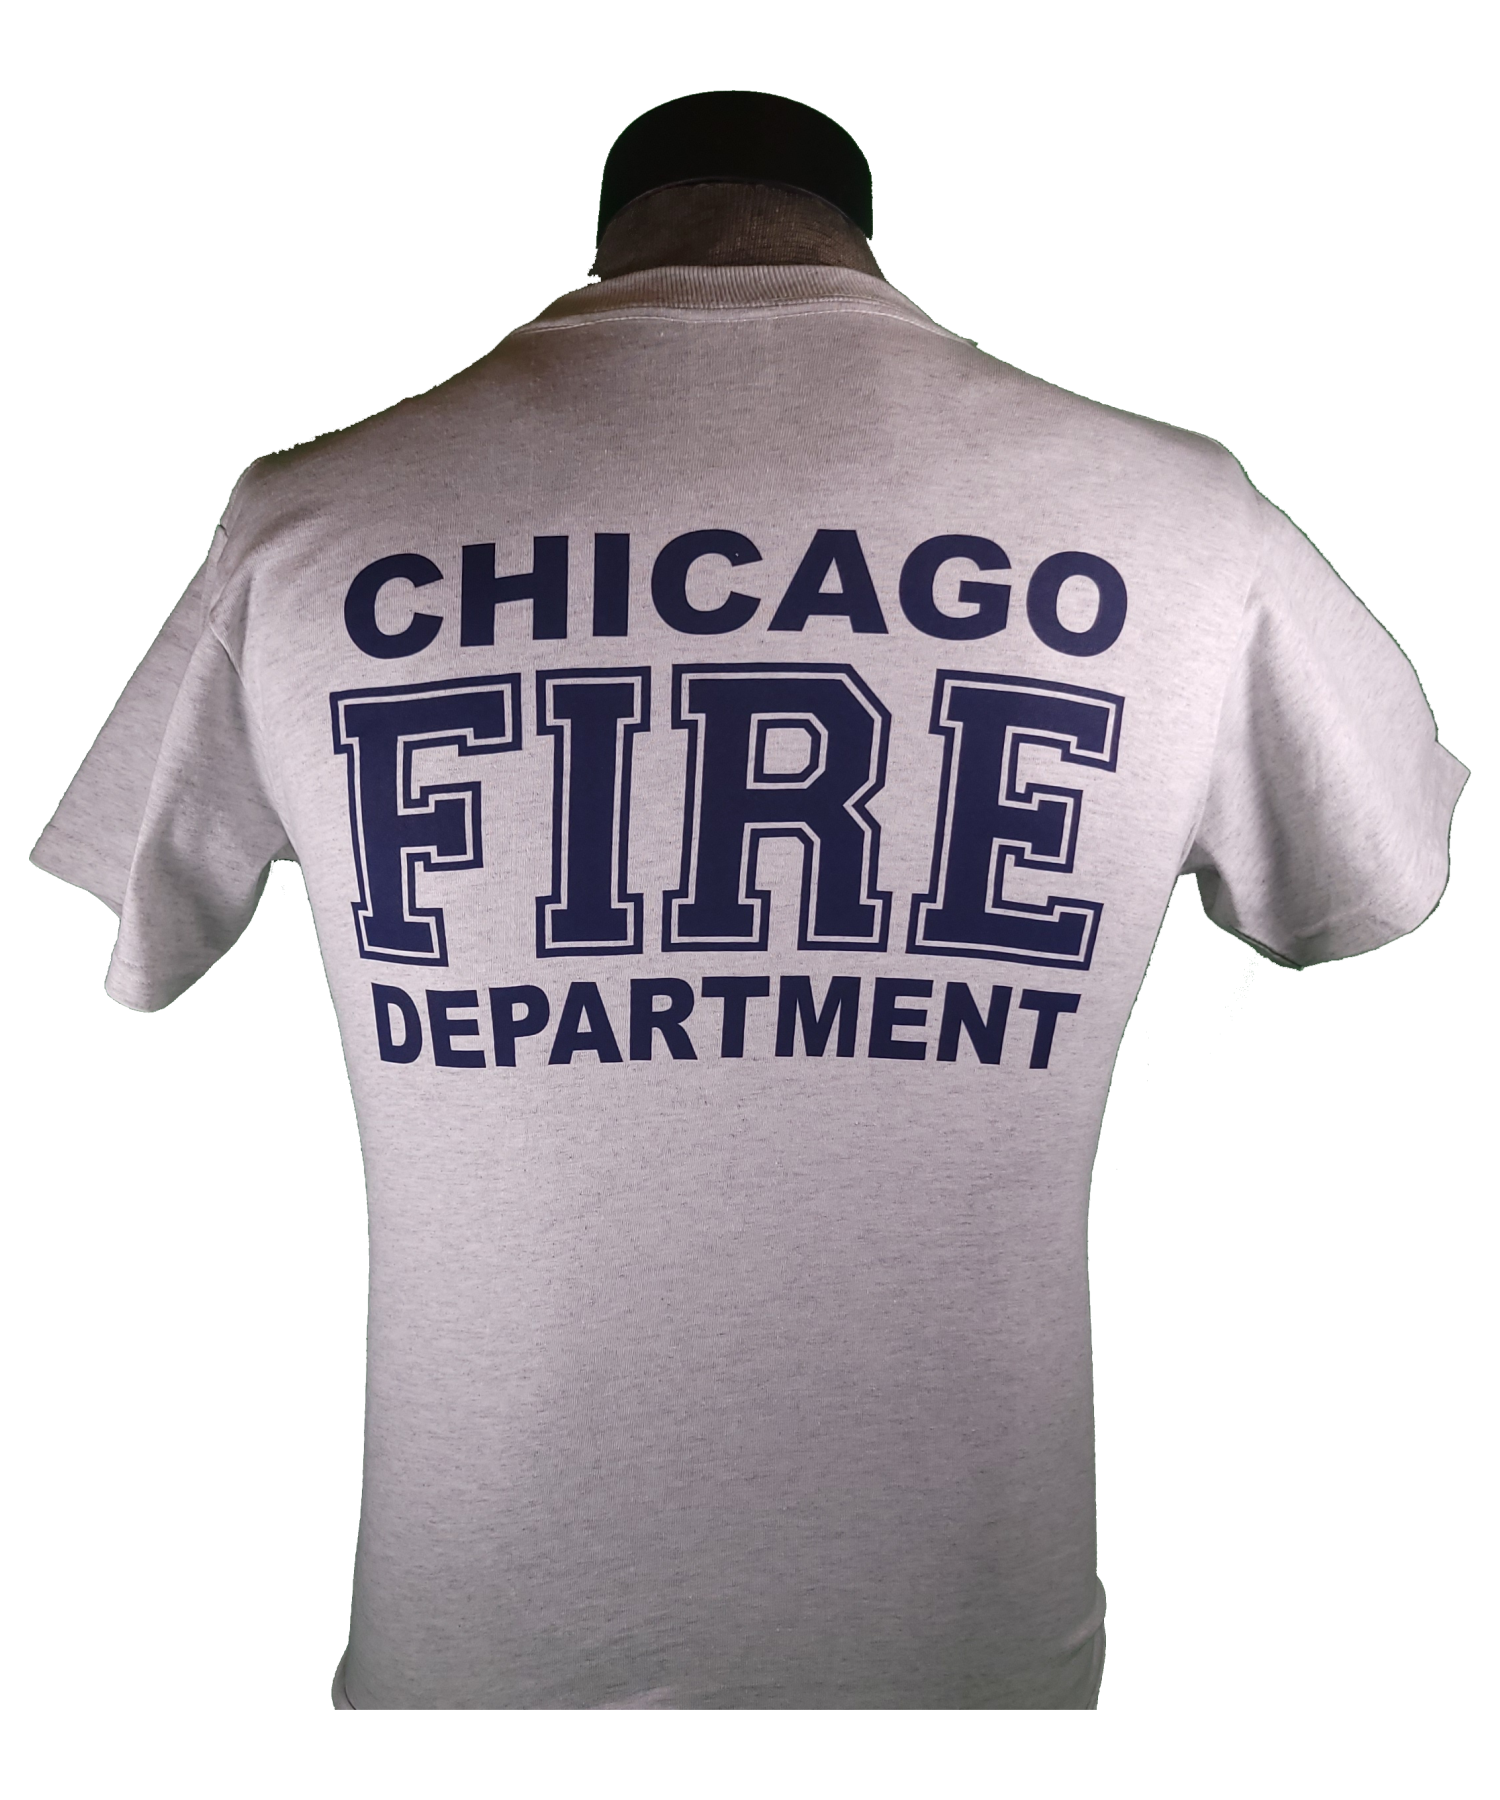 Chicago Fire Department Duty T-Shirt Navy